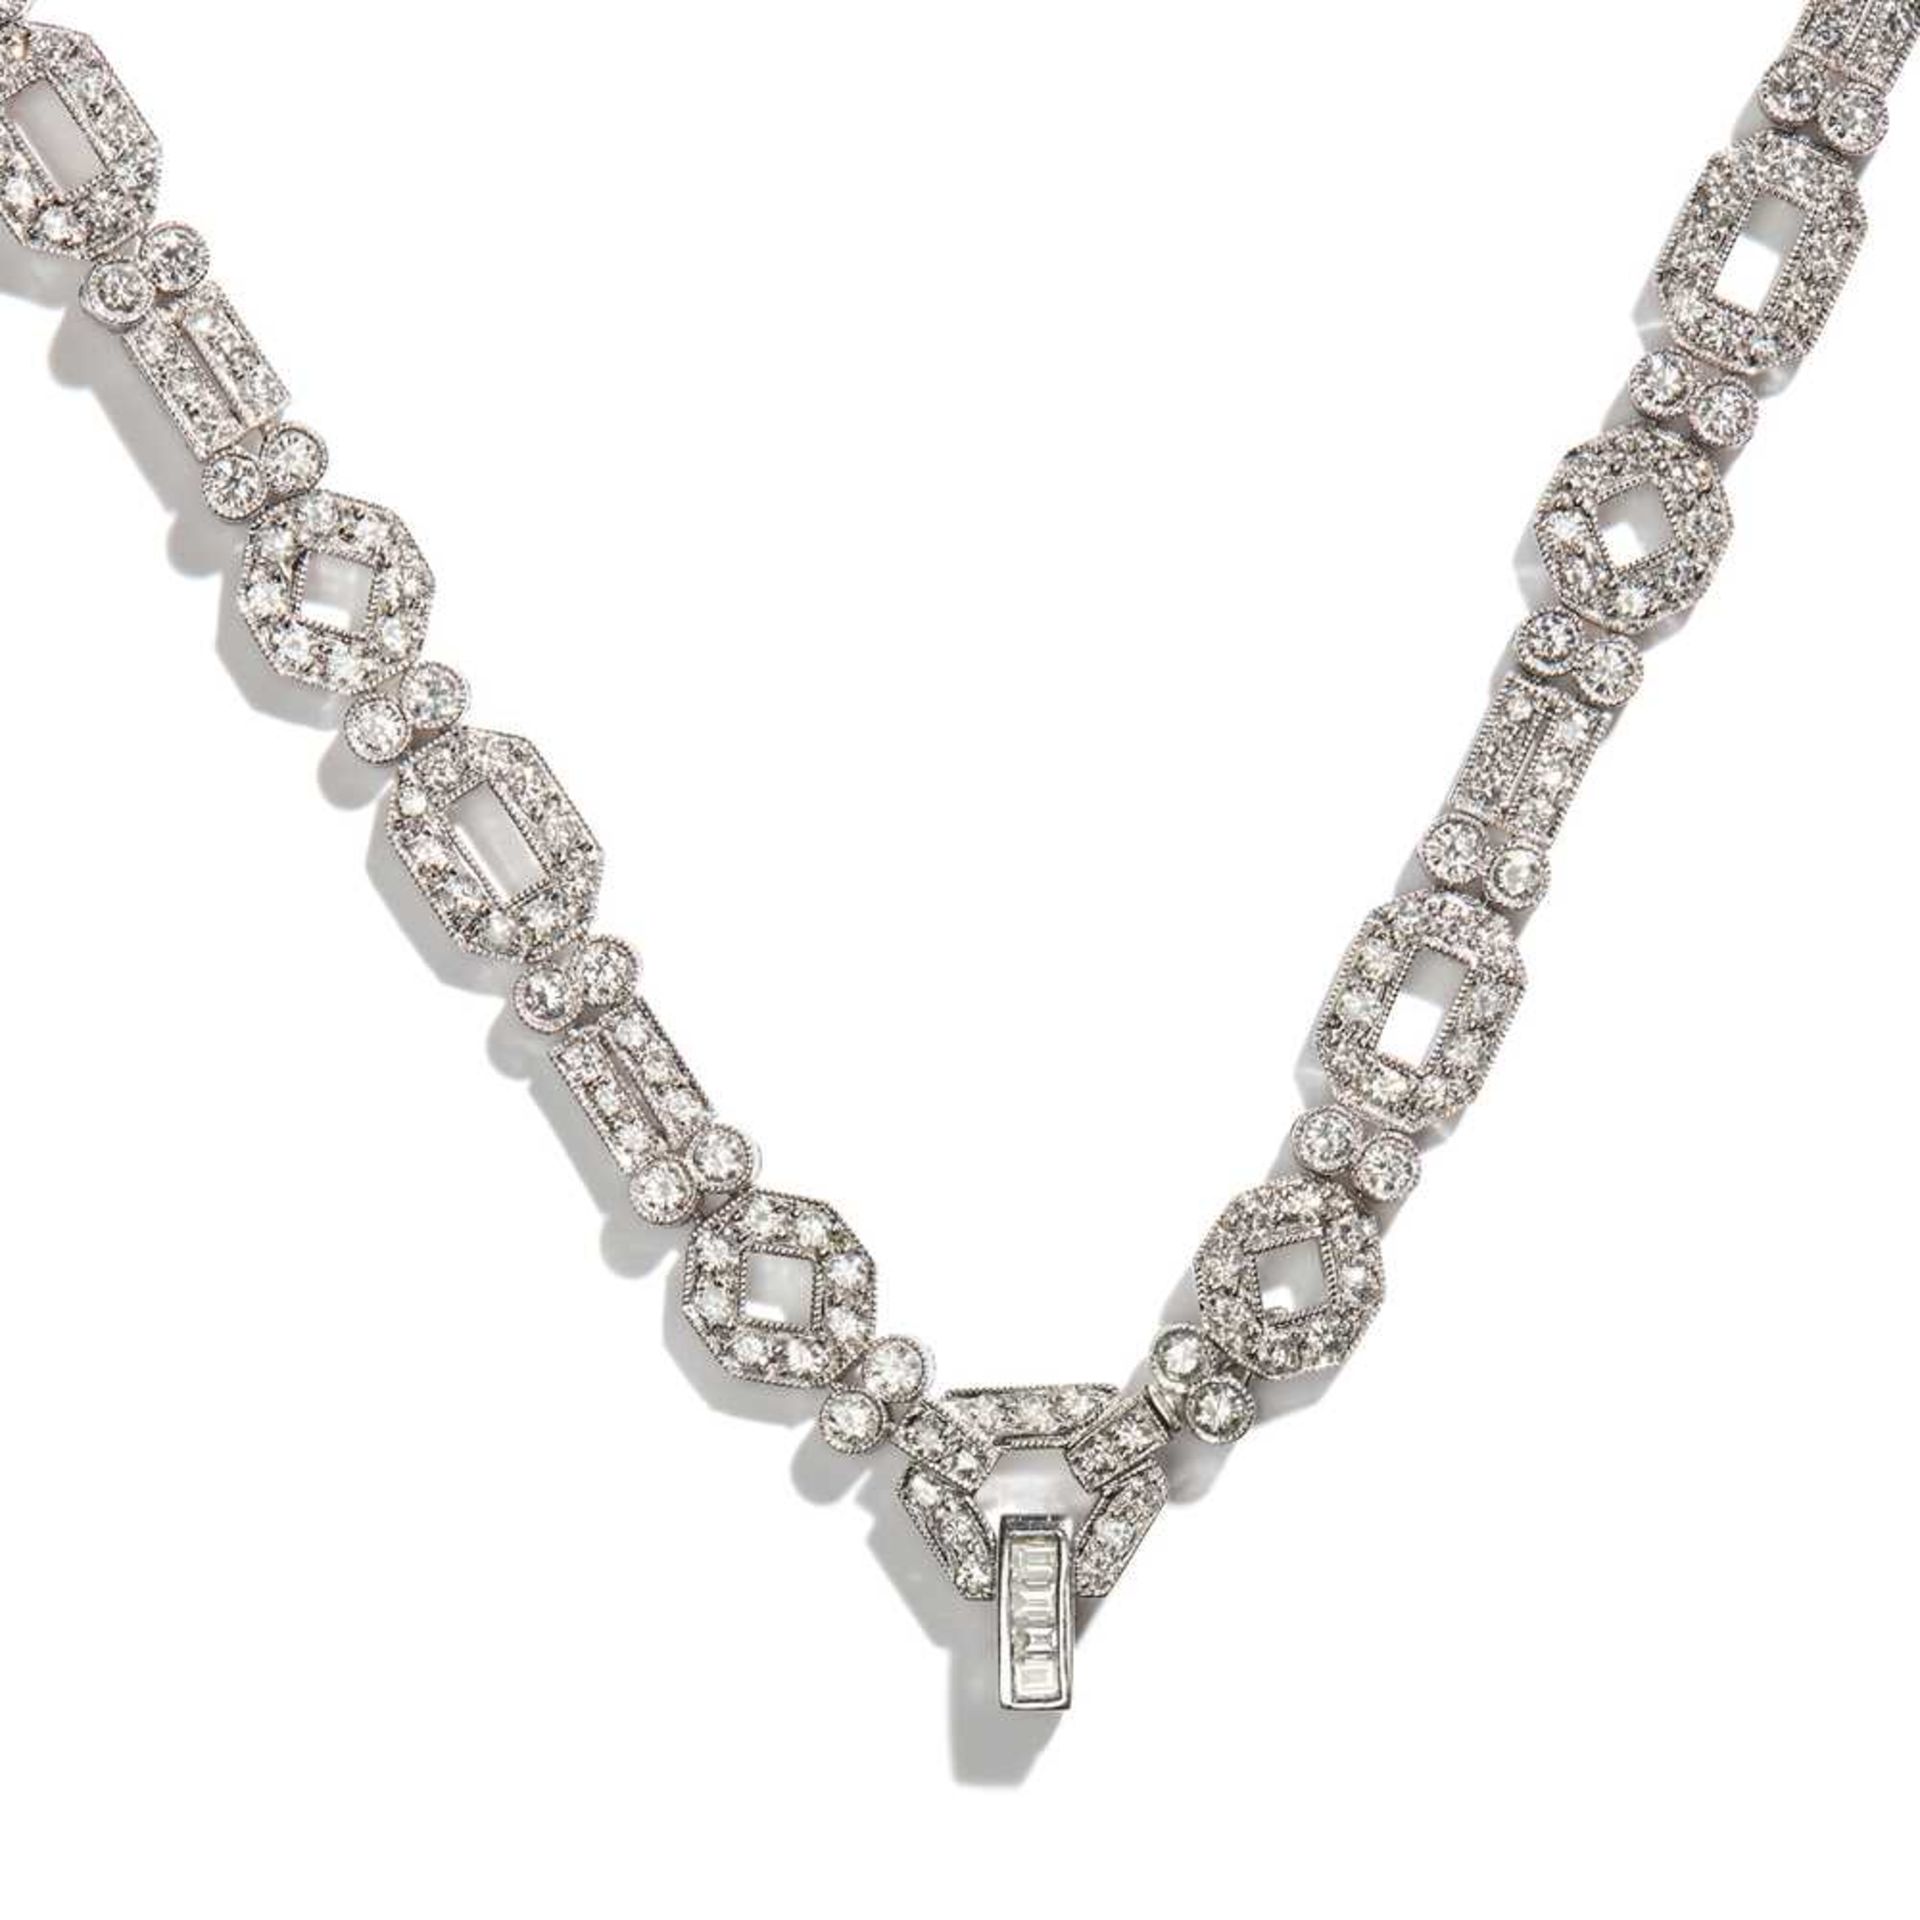 A diamond necklace - Image 3 of 3